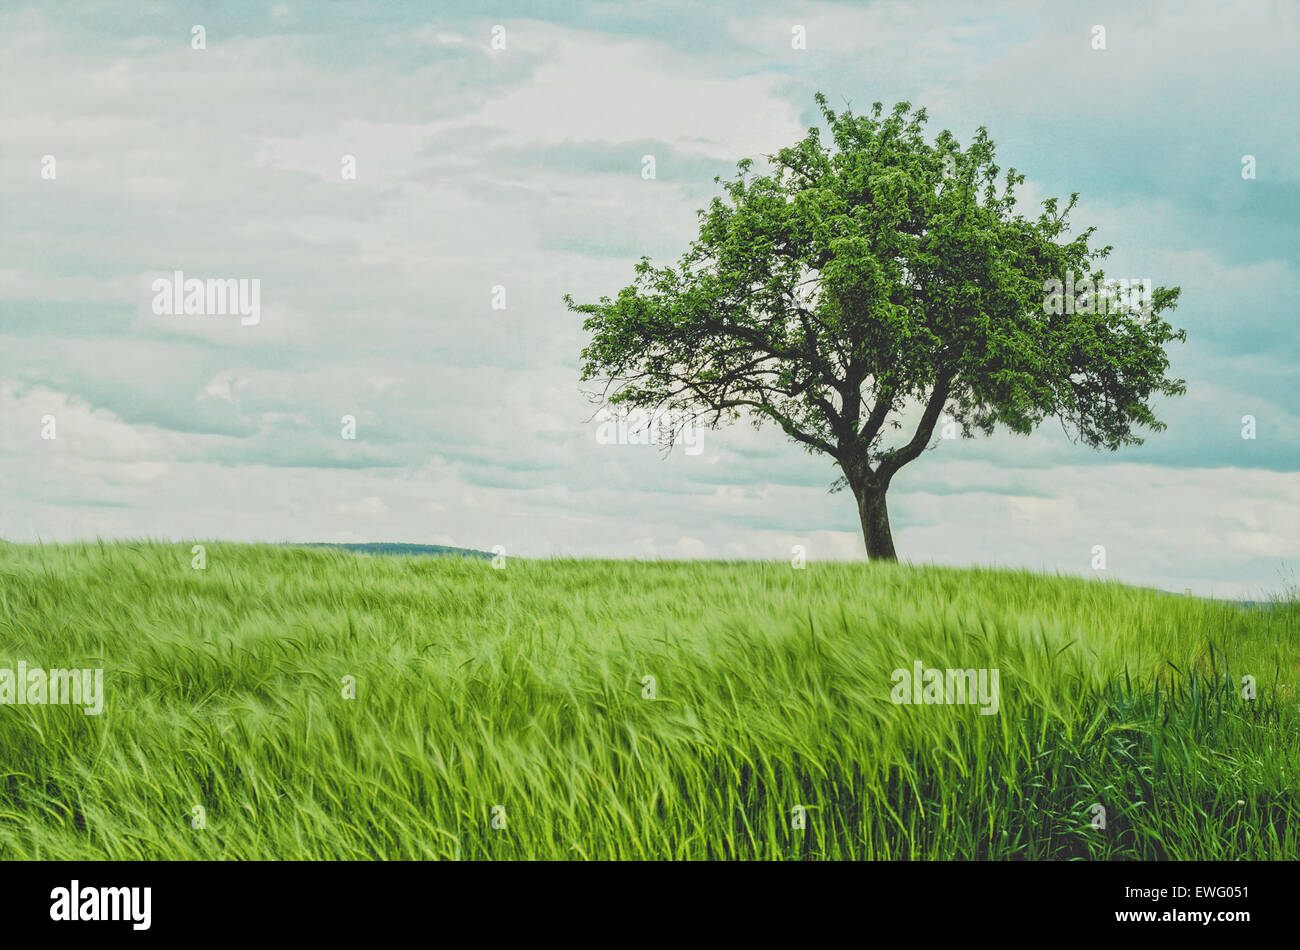 Tree in a Grassy Field Stock Photo